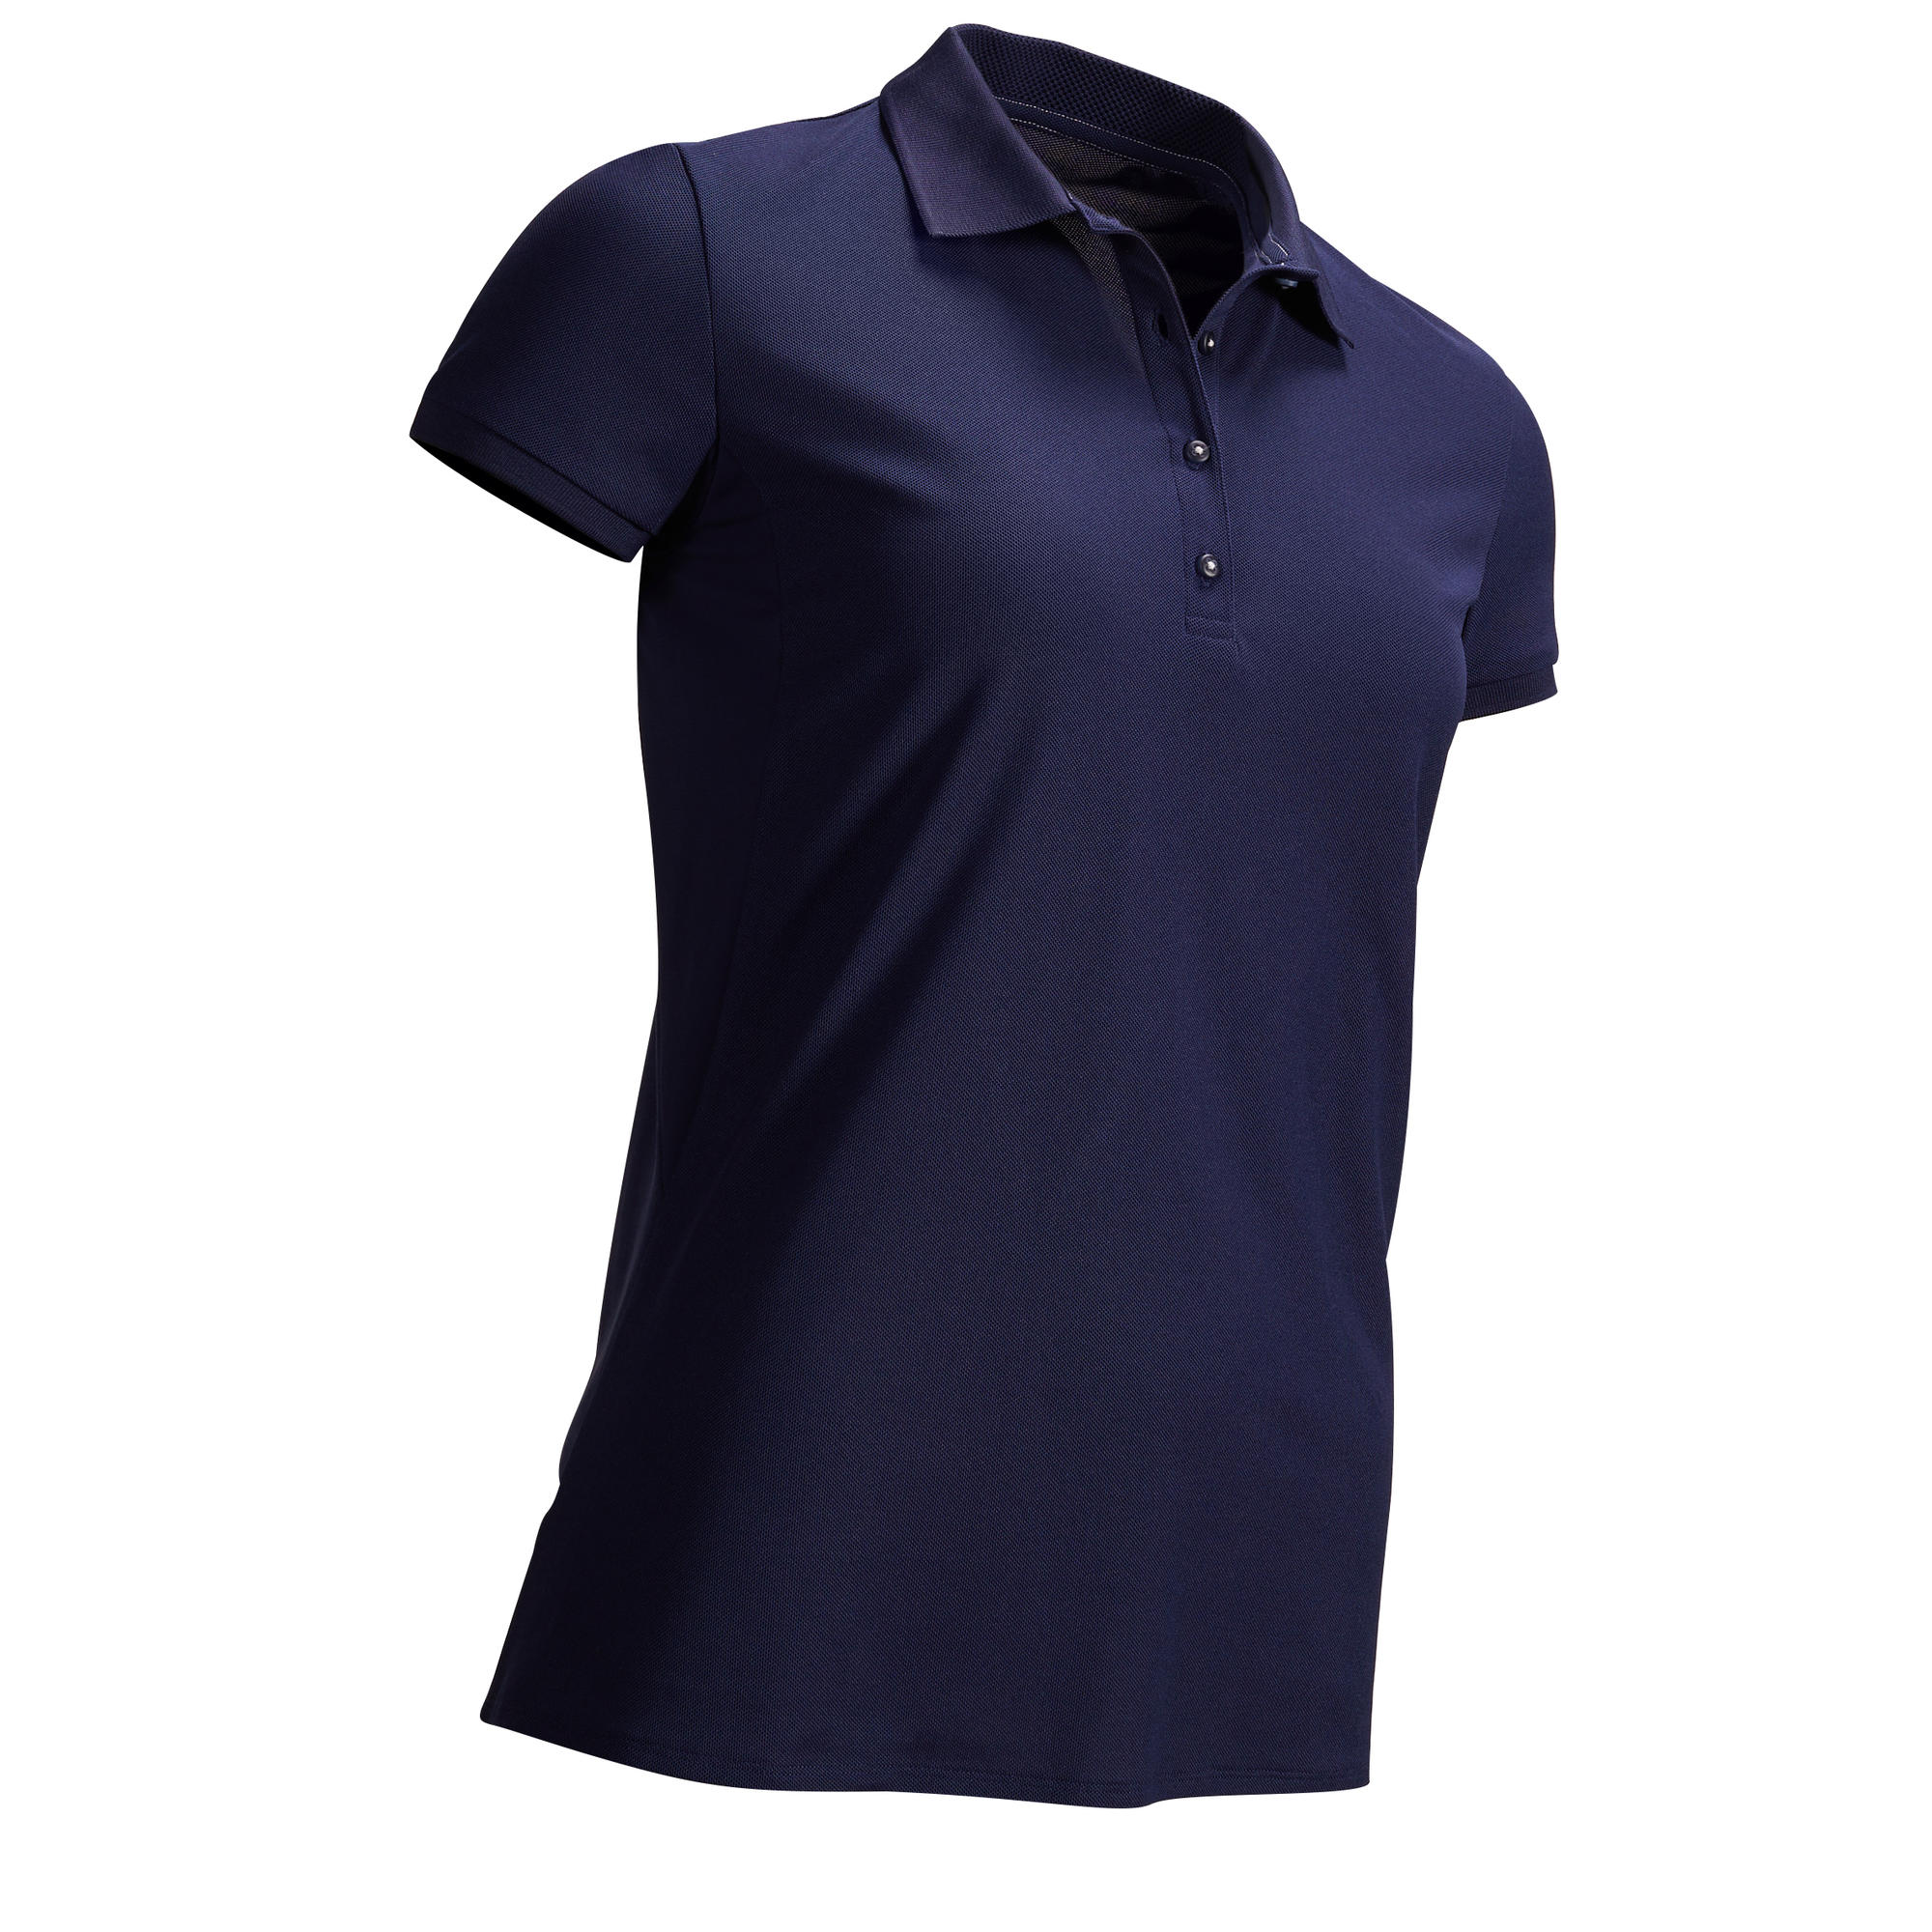 navy blue polo t shirt women's